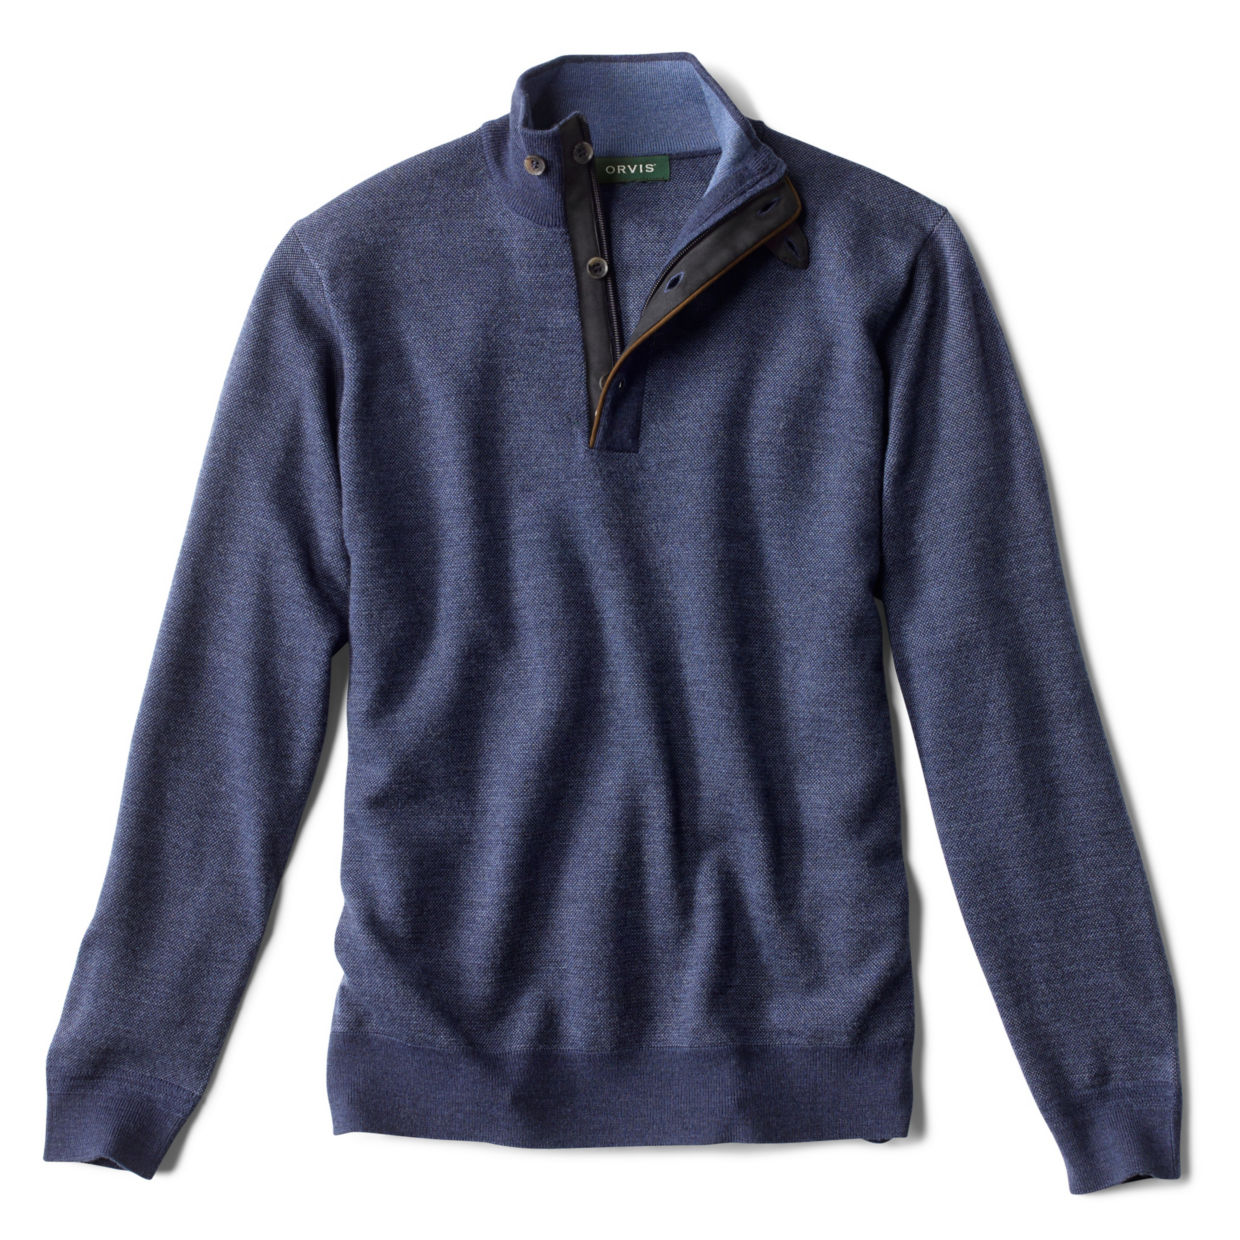 Birdseye Zip Button Mockneck Sweater